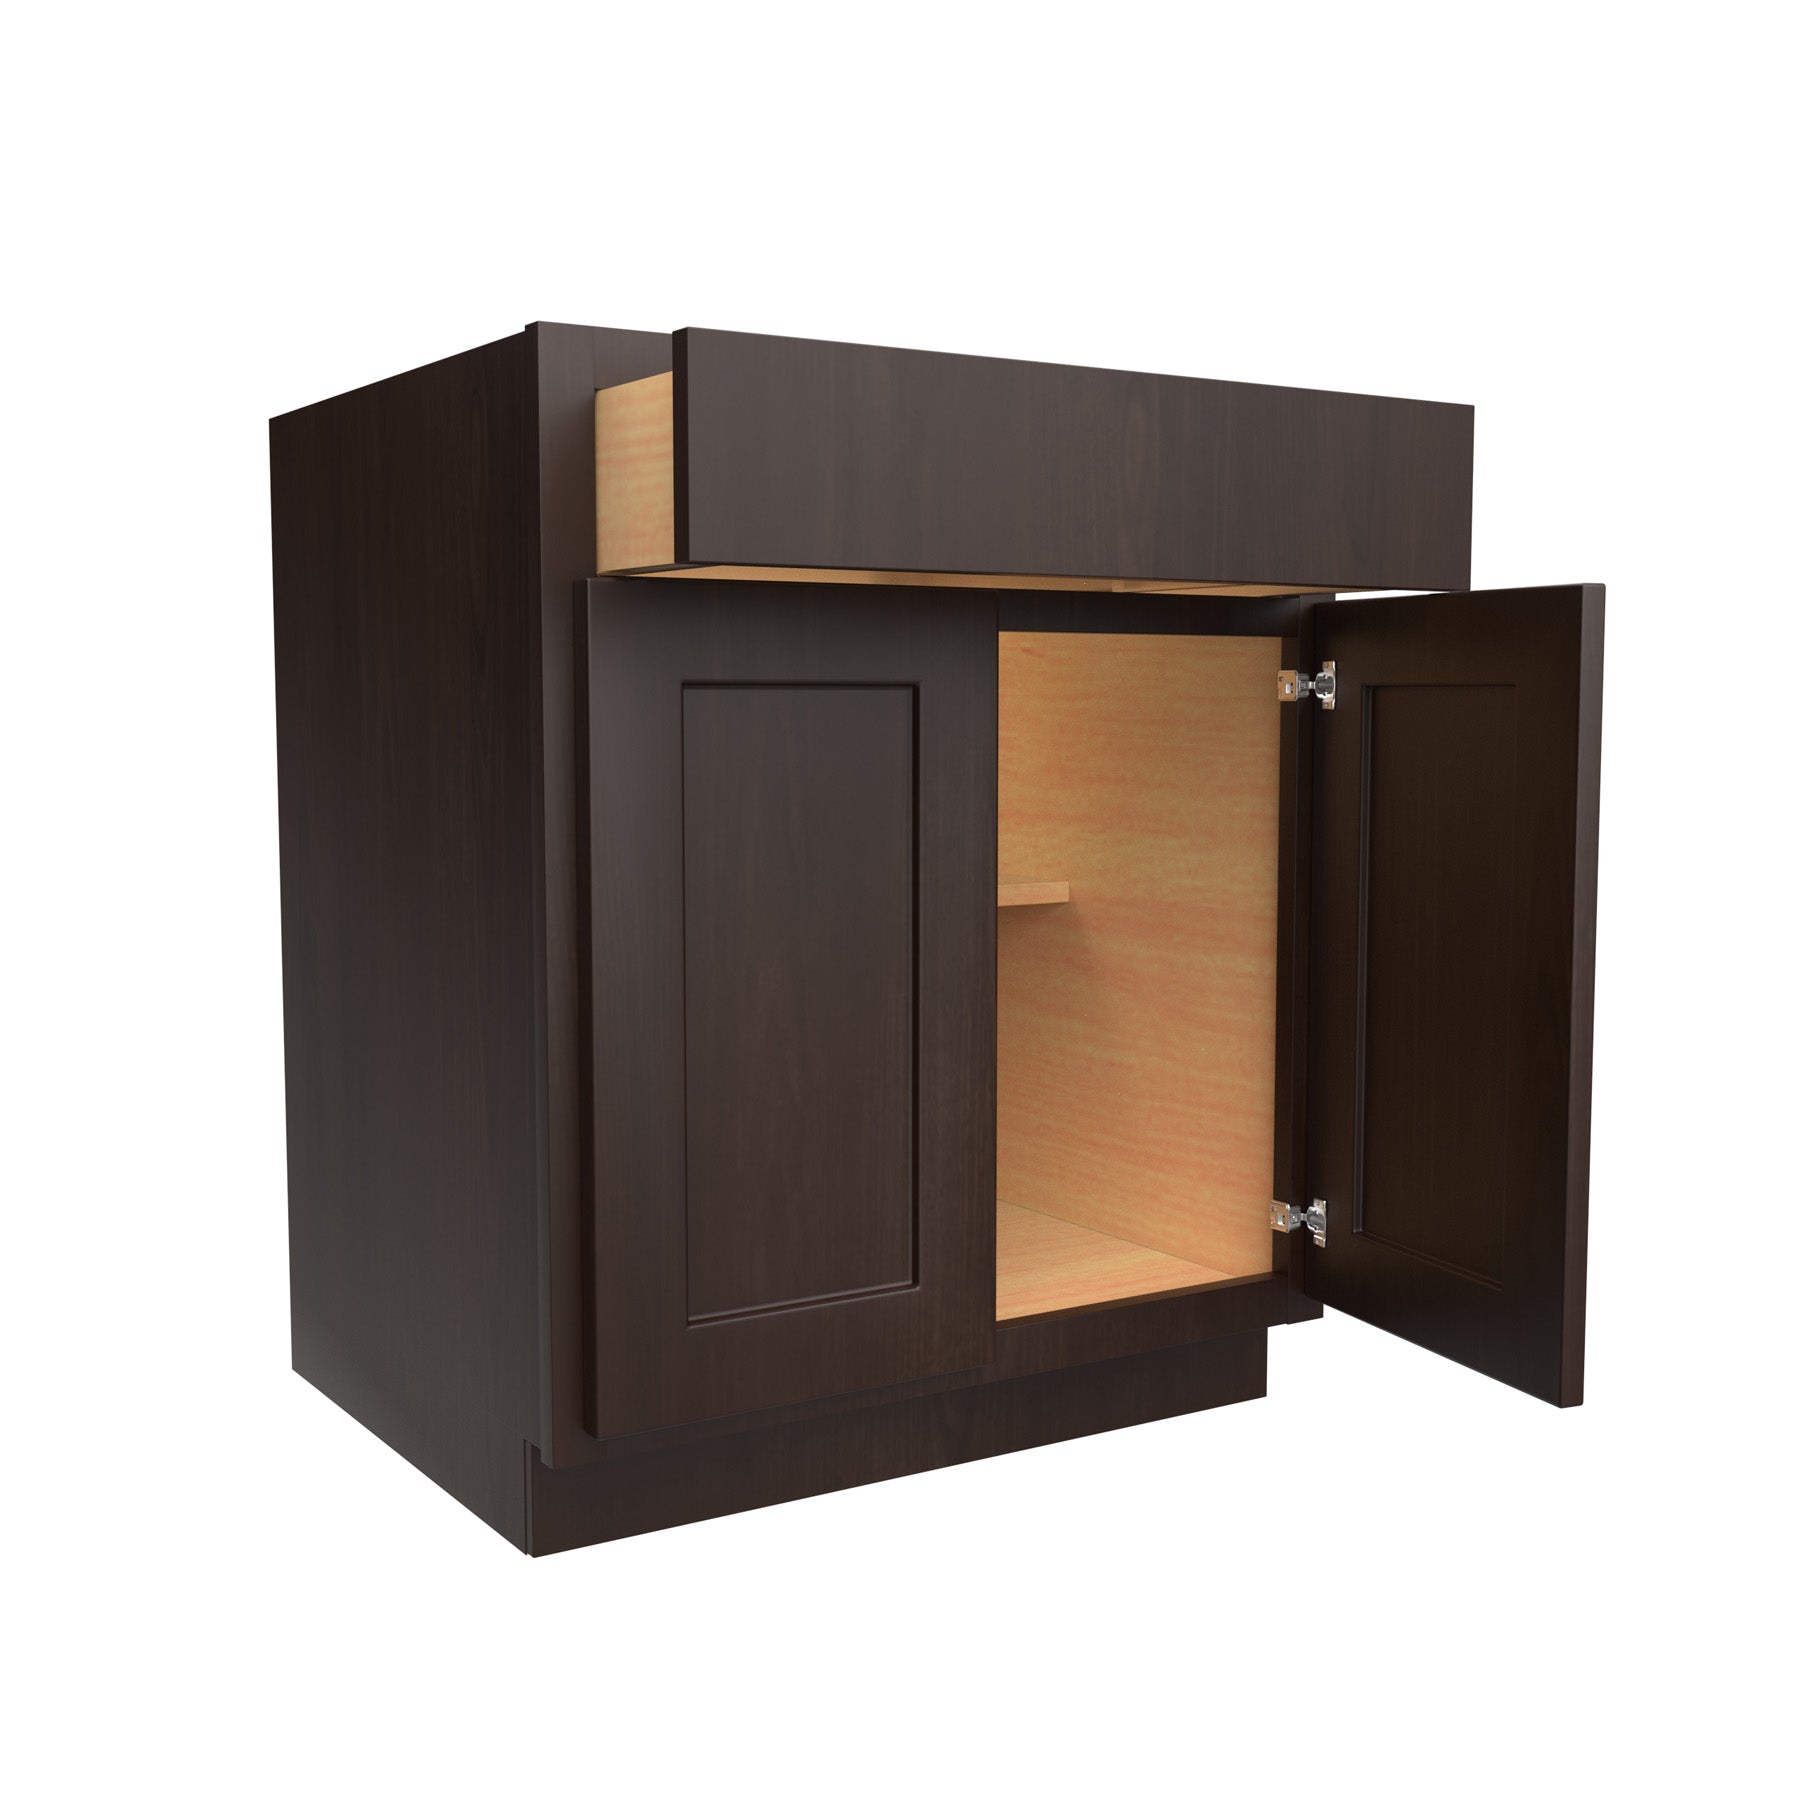 Base Cabinet, Handicap 27"W x 32.5"H x 24"D - RTA Luxor Espresso